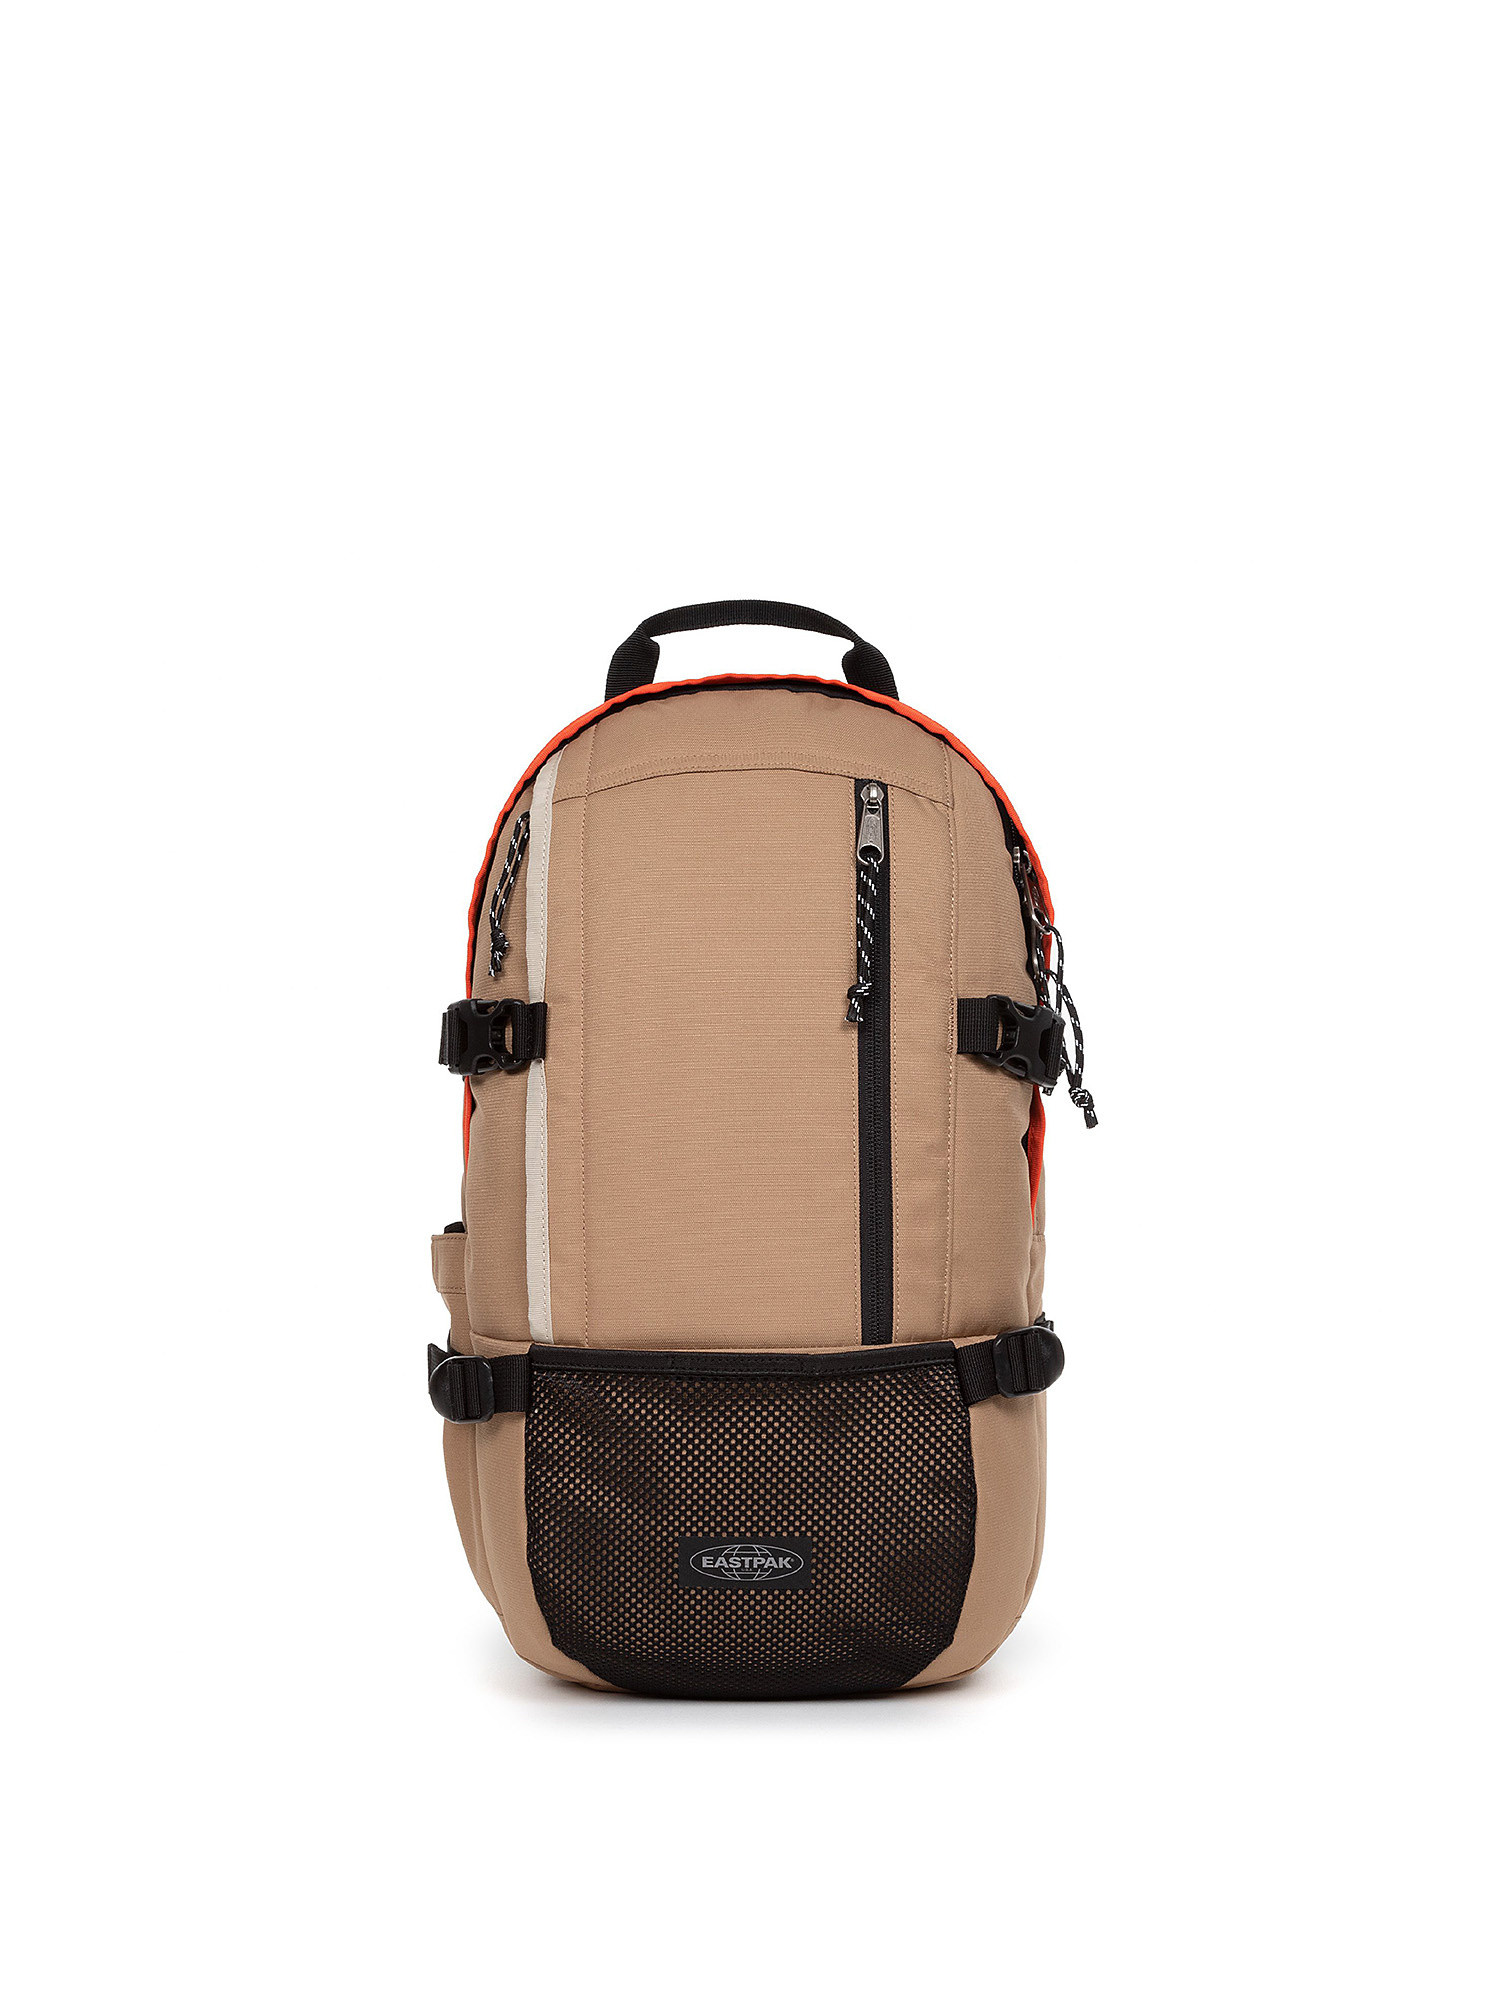 Eastpak - Floid Cs Explore brown backpack, Brown, large image number 0